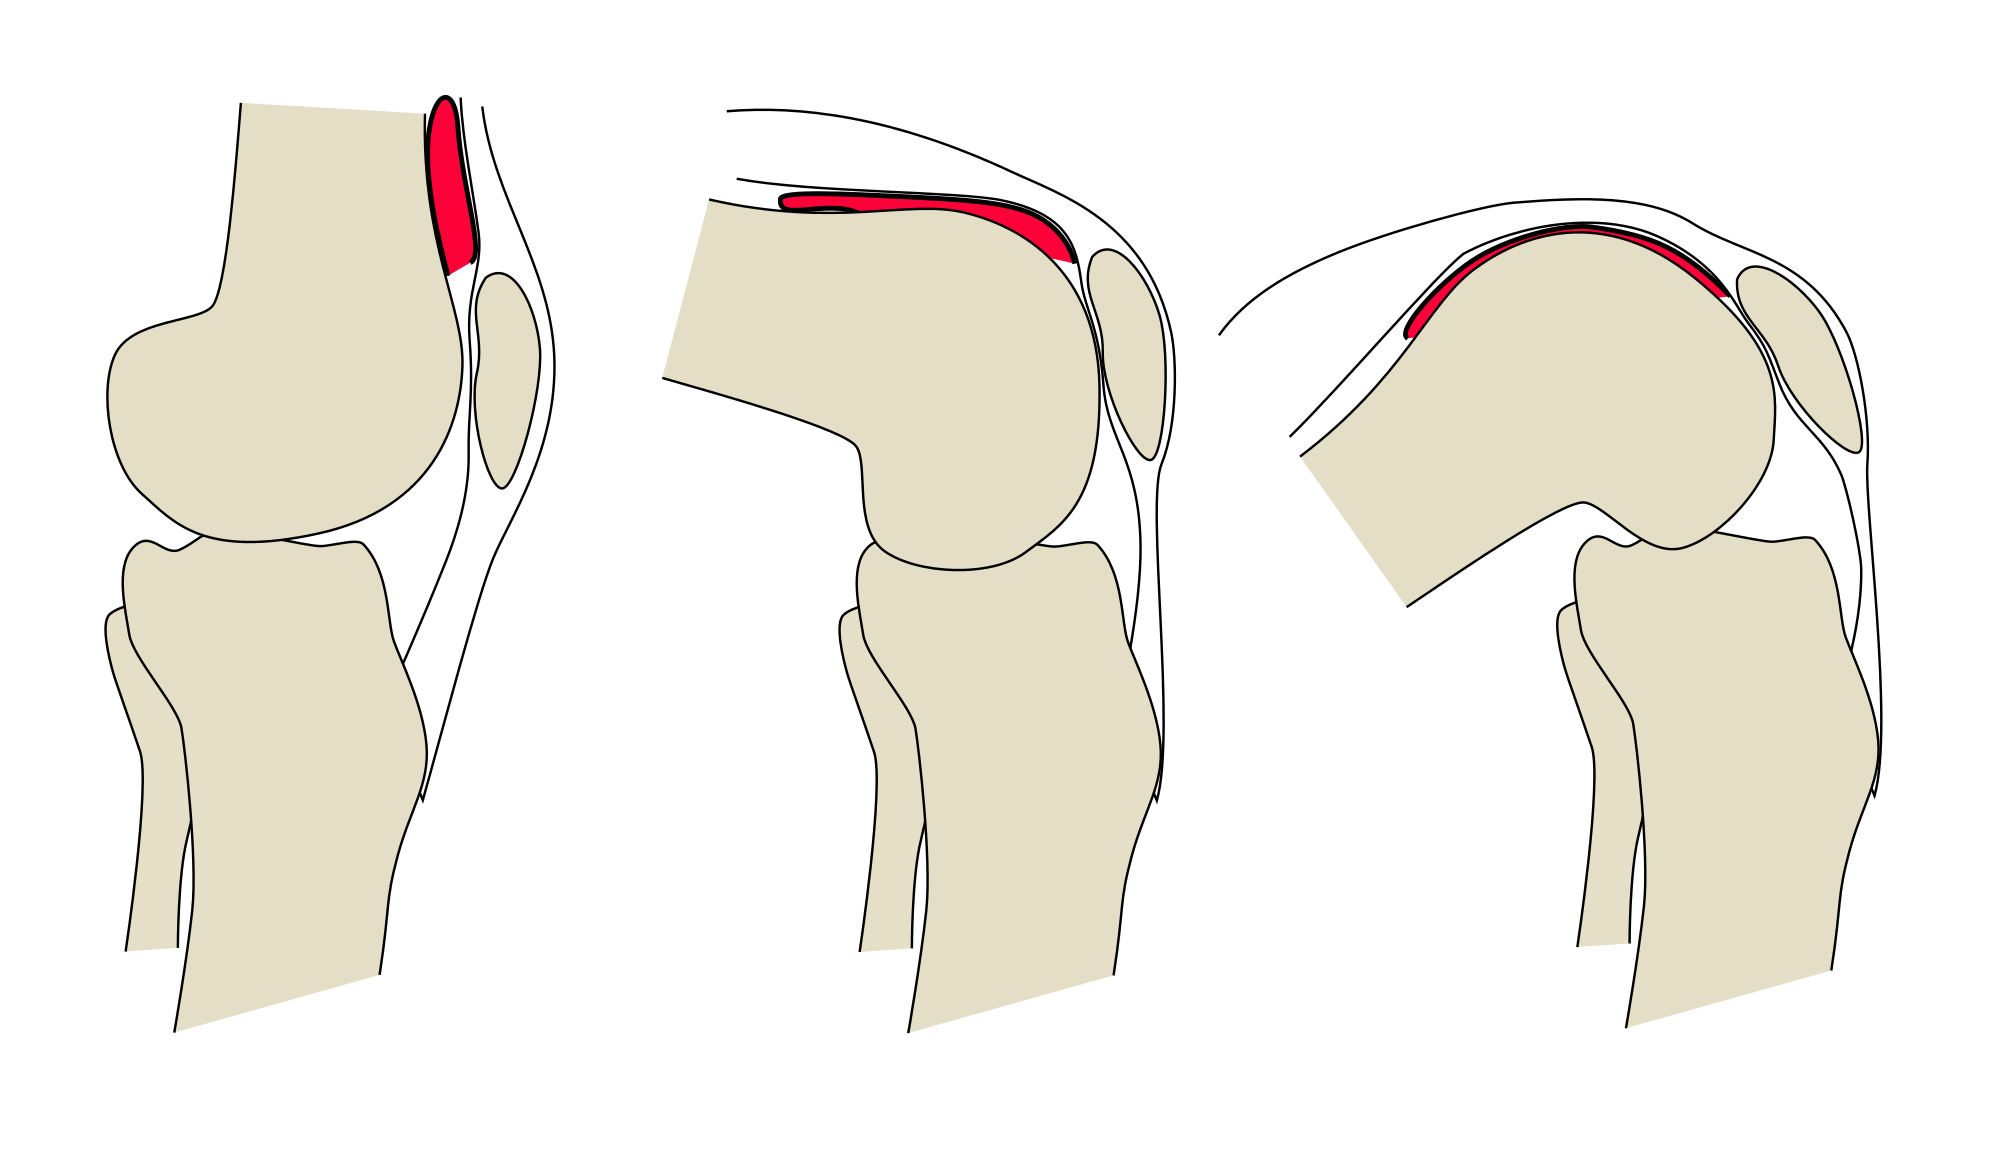 knee clipart bone joint